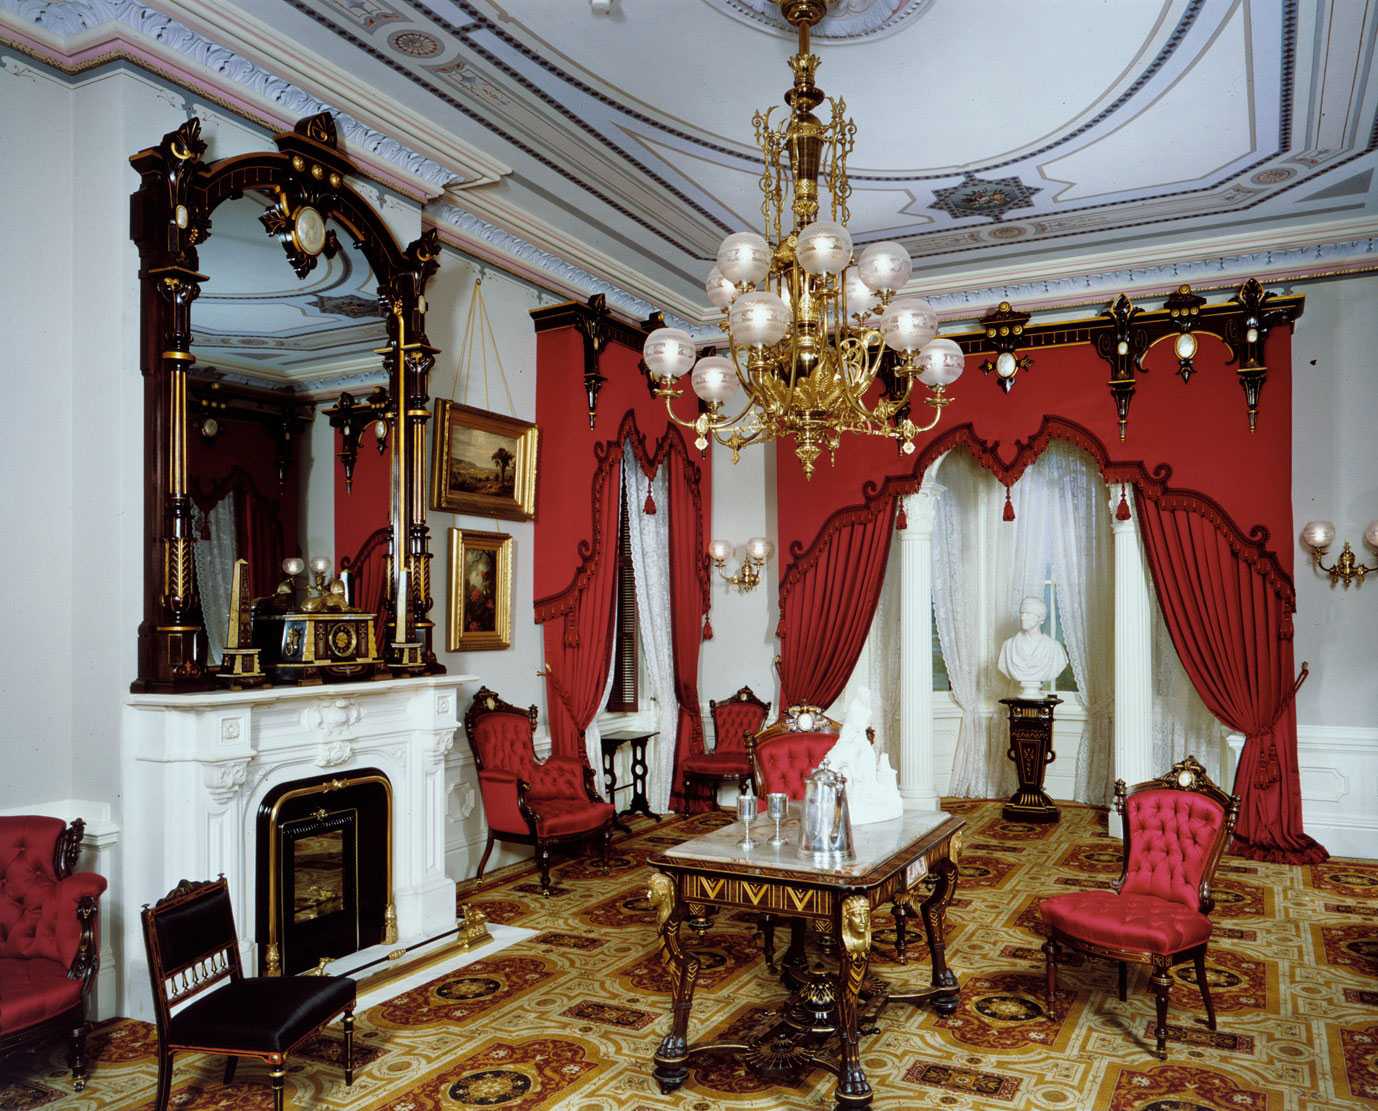 original design of the empire style living room